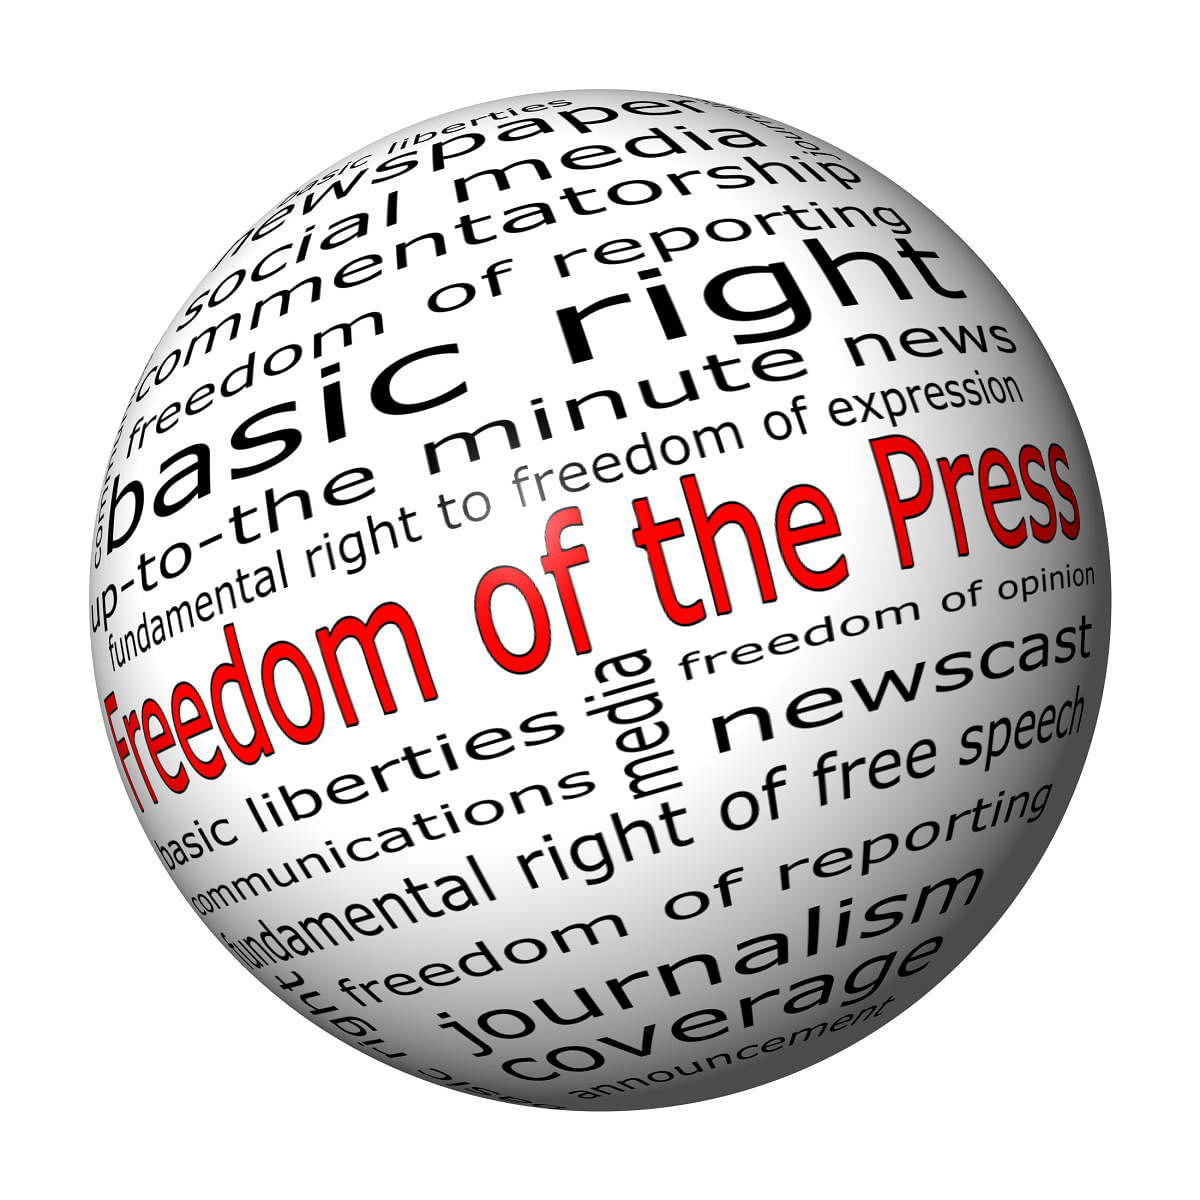 press freedom